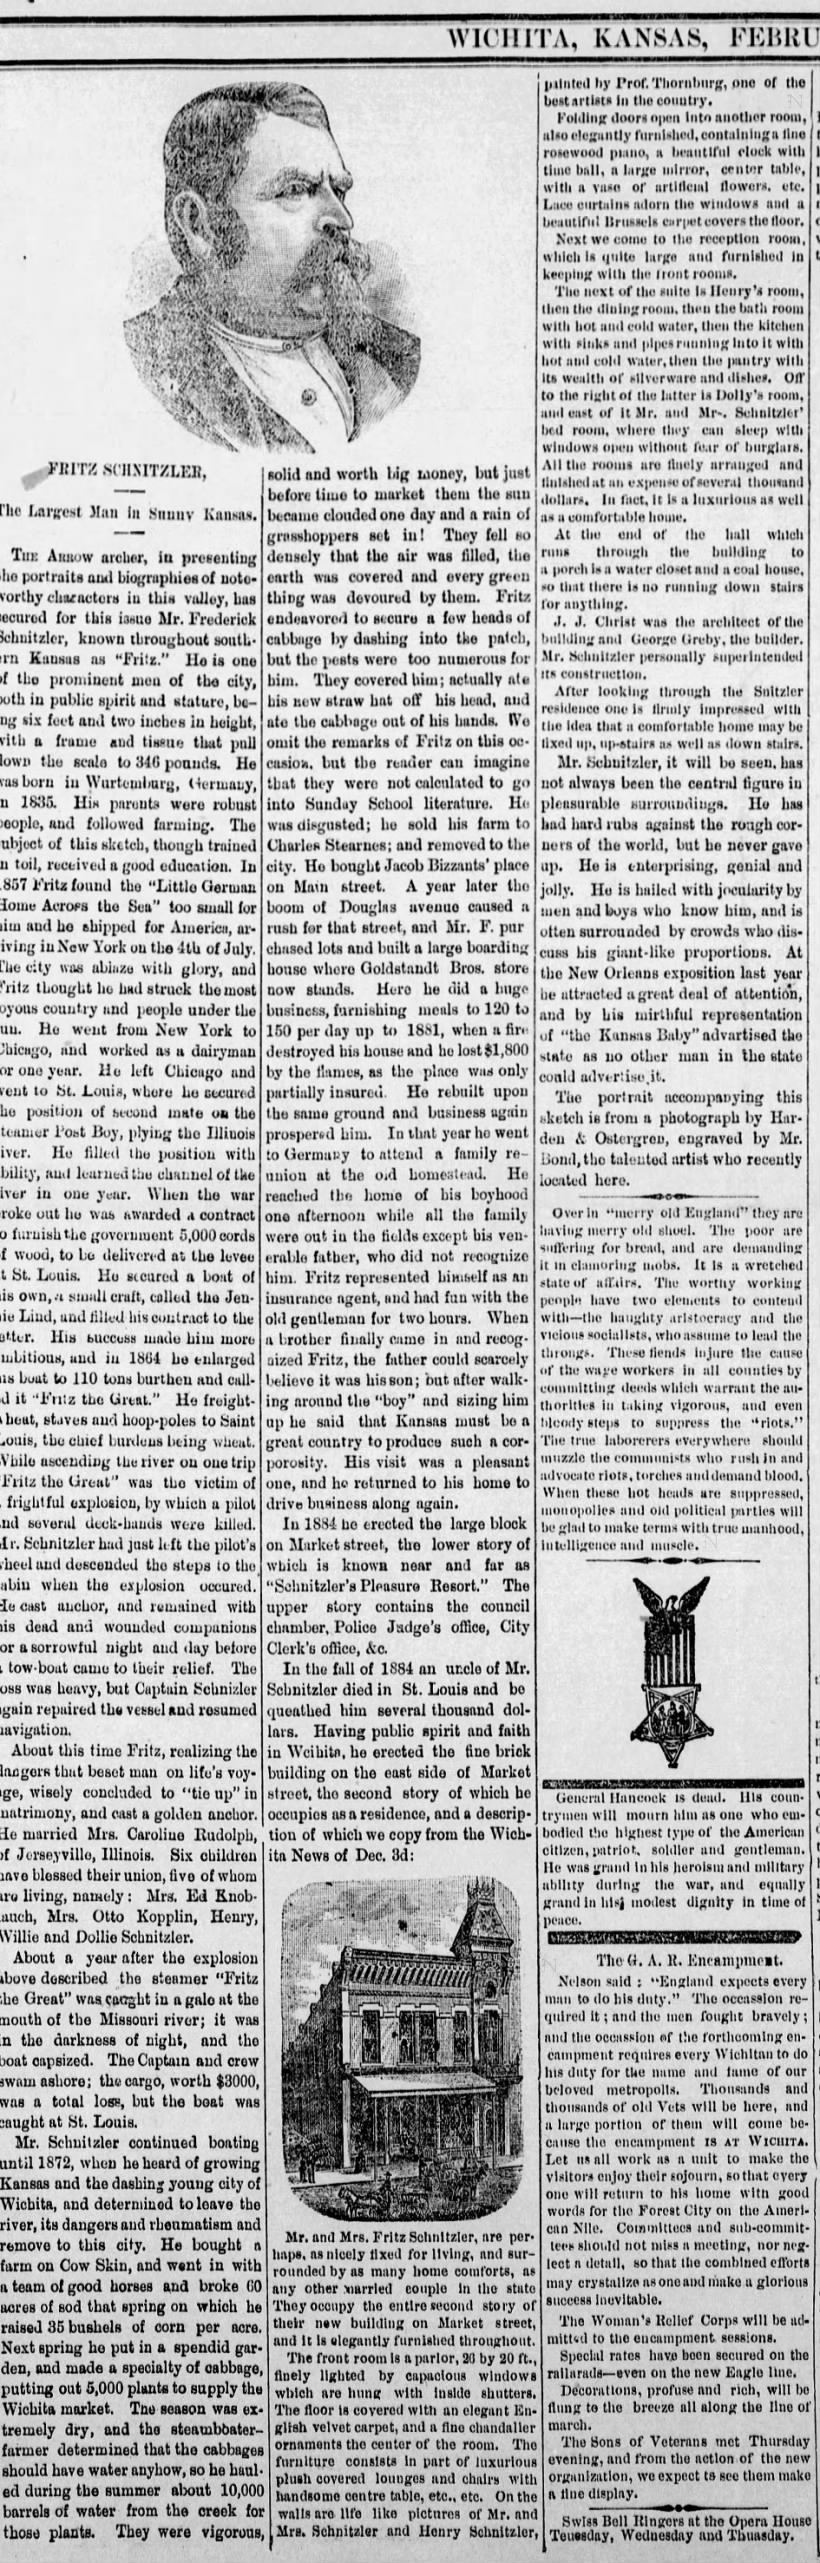 Fritz Schnitzler interview, "The Largest Man in Sunny Kansas," 1886, The Arrow